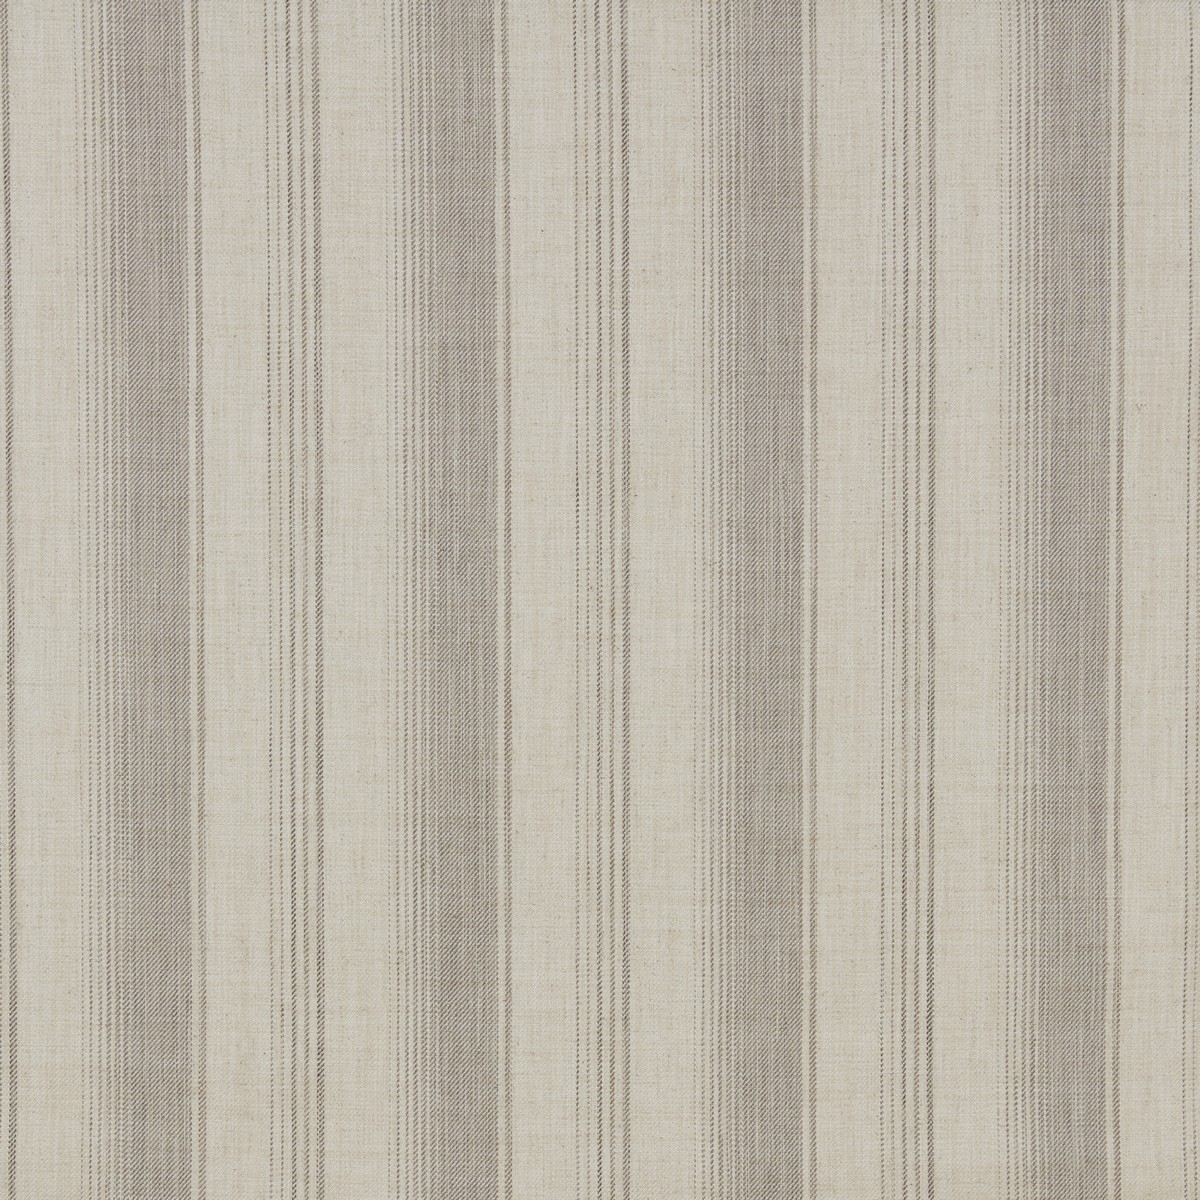 Sackville Stripe Dove Fabric by iLiv